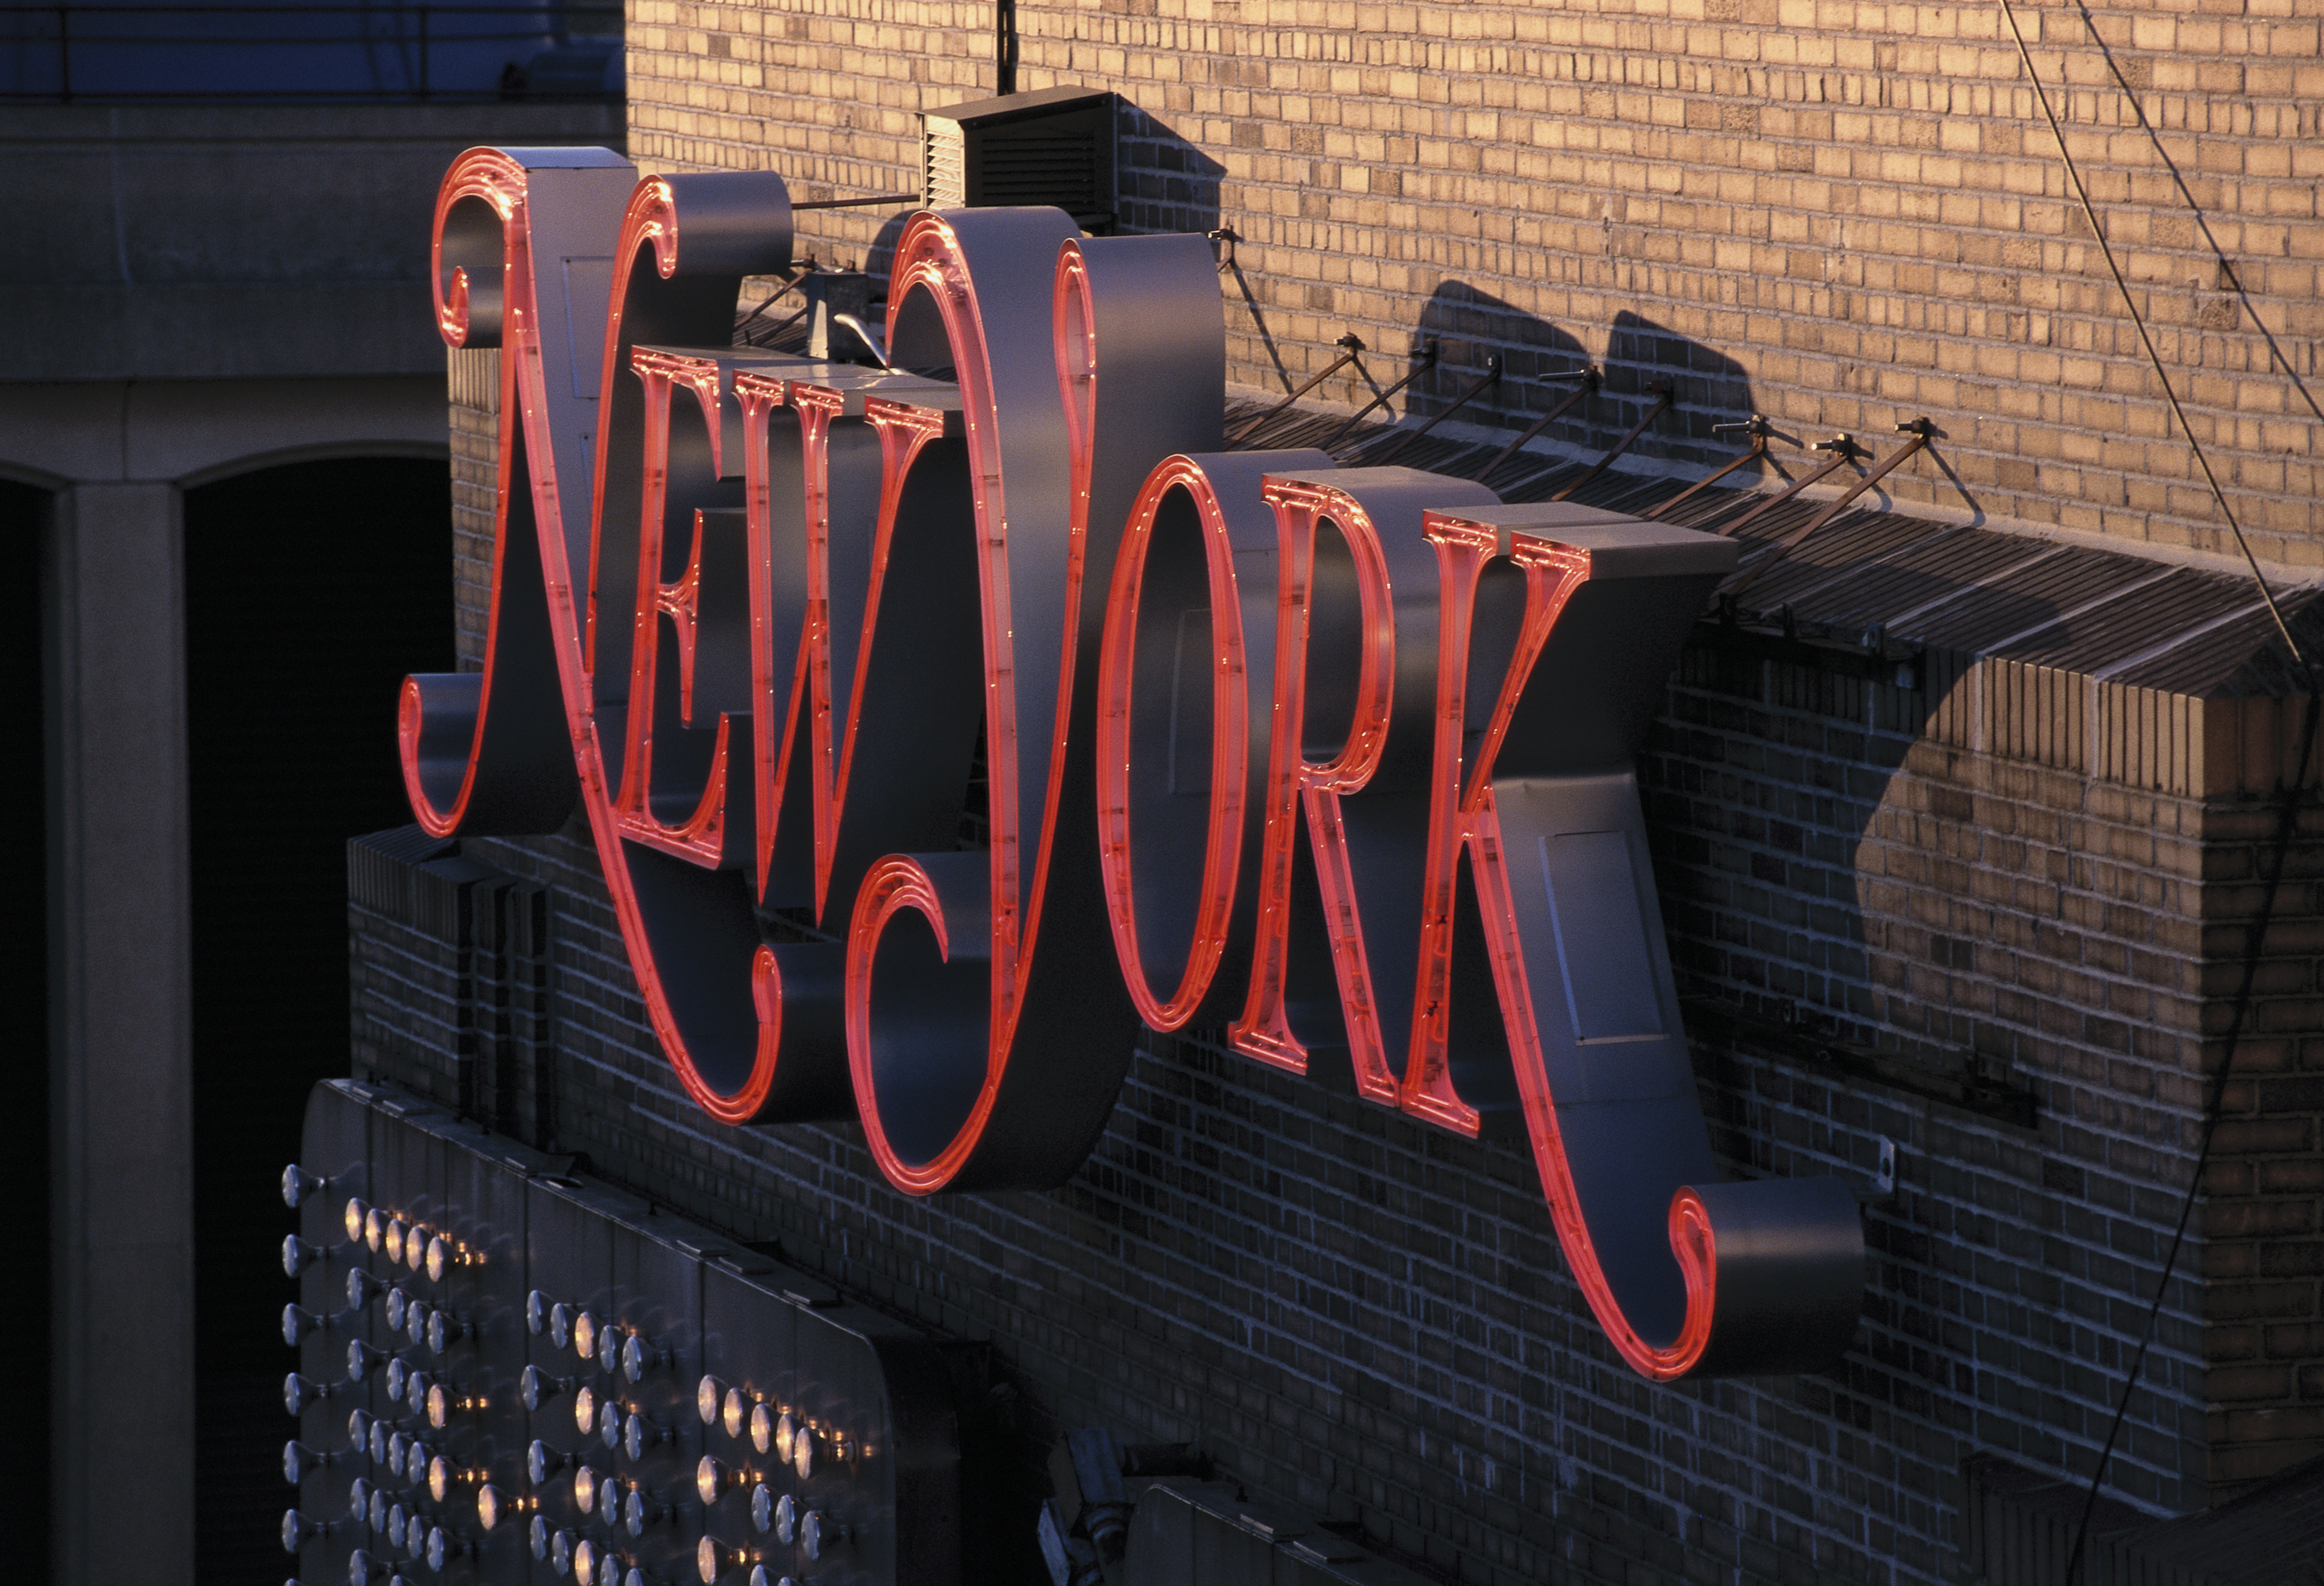 New York Magazine Logo on Building Exterior (Photo by James Leynse/Corbis via Getty Images)